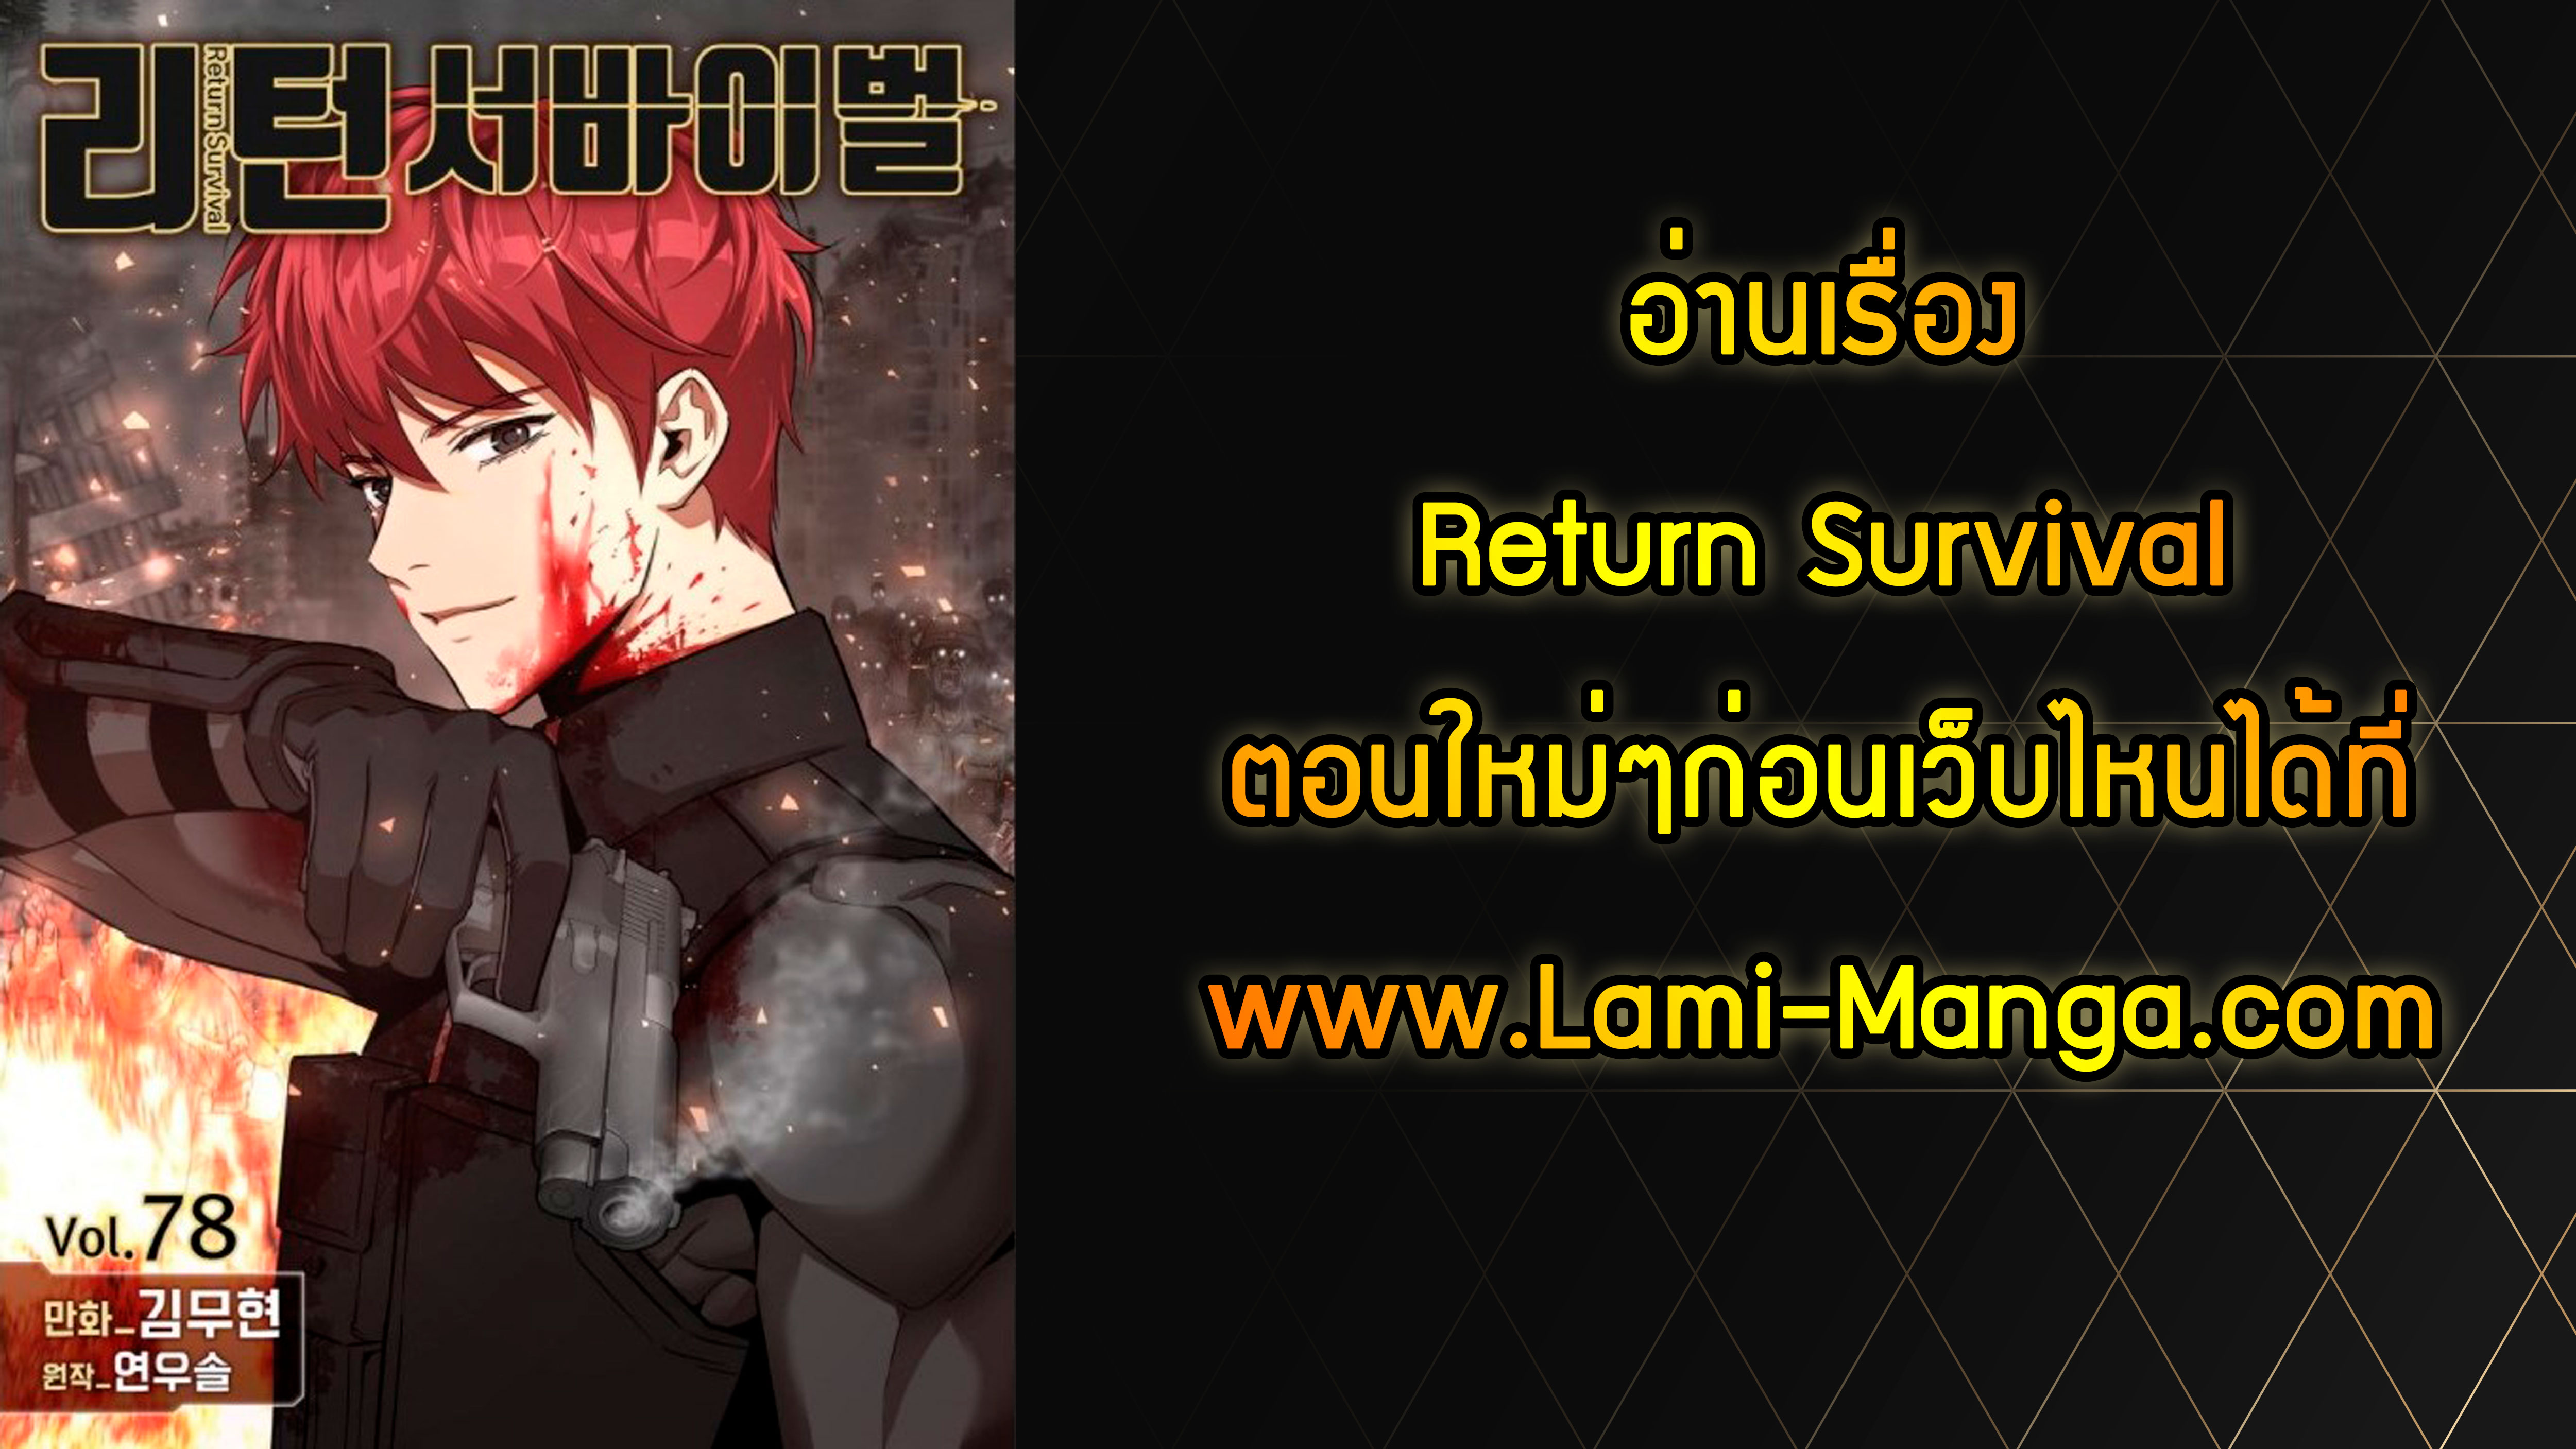 Return Survival 54 (36)